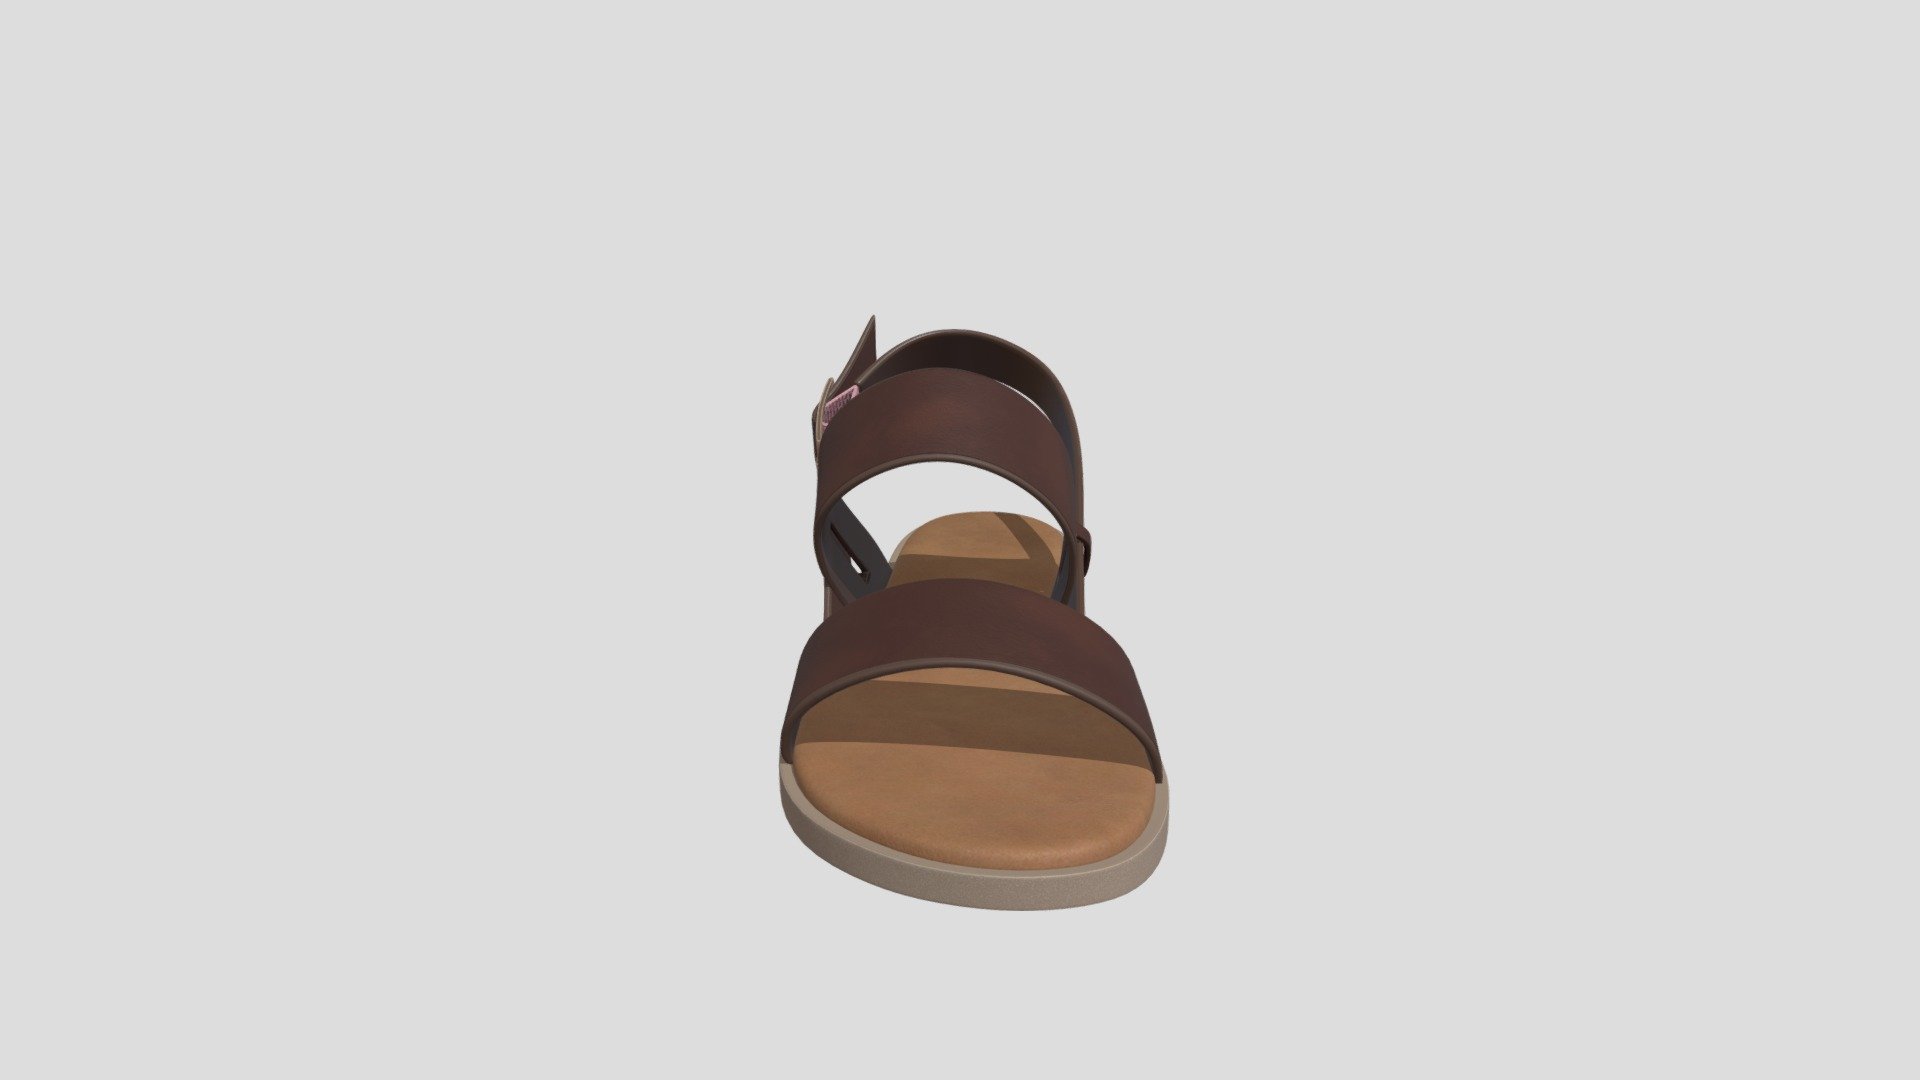 Women's Lavin Sandals.
GLTF File format 3d model